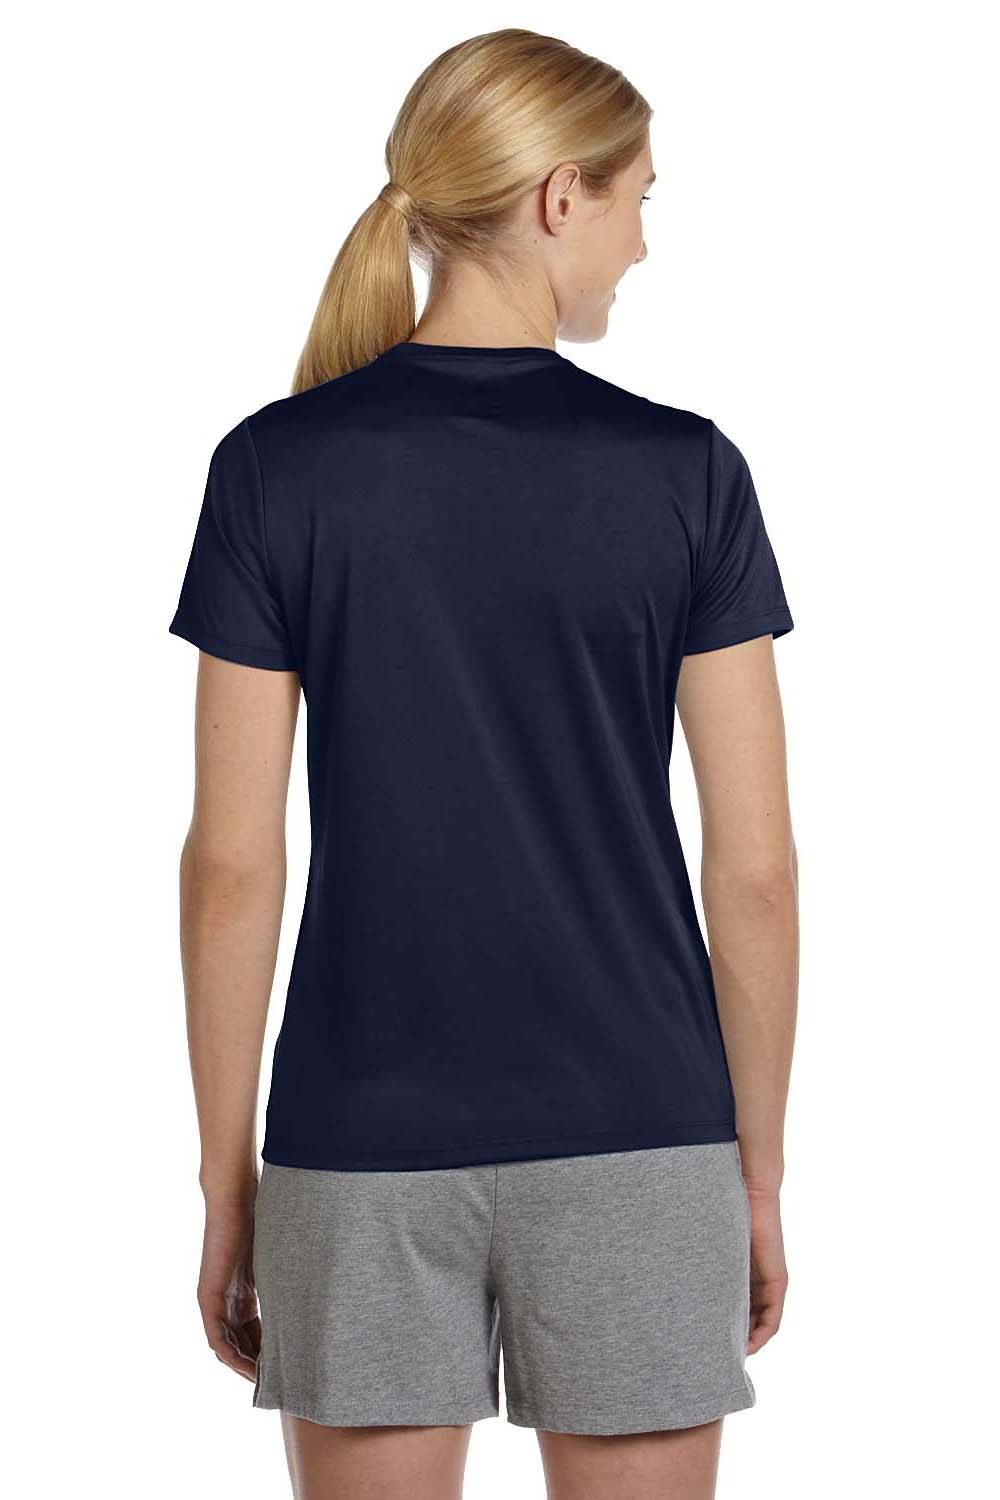 Hanes 4830 Womens Cool DRI FreshIQ Moisture Wicking Short Sleeve Crewneck T-Shirt Navy Blue Back